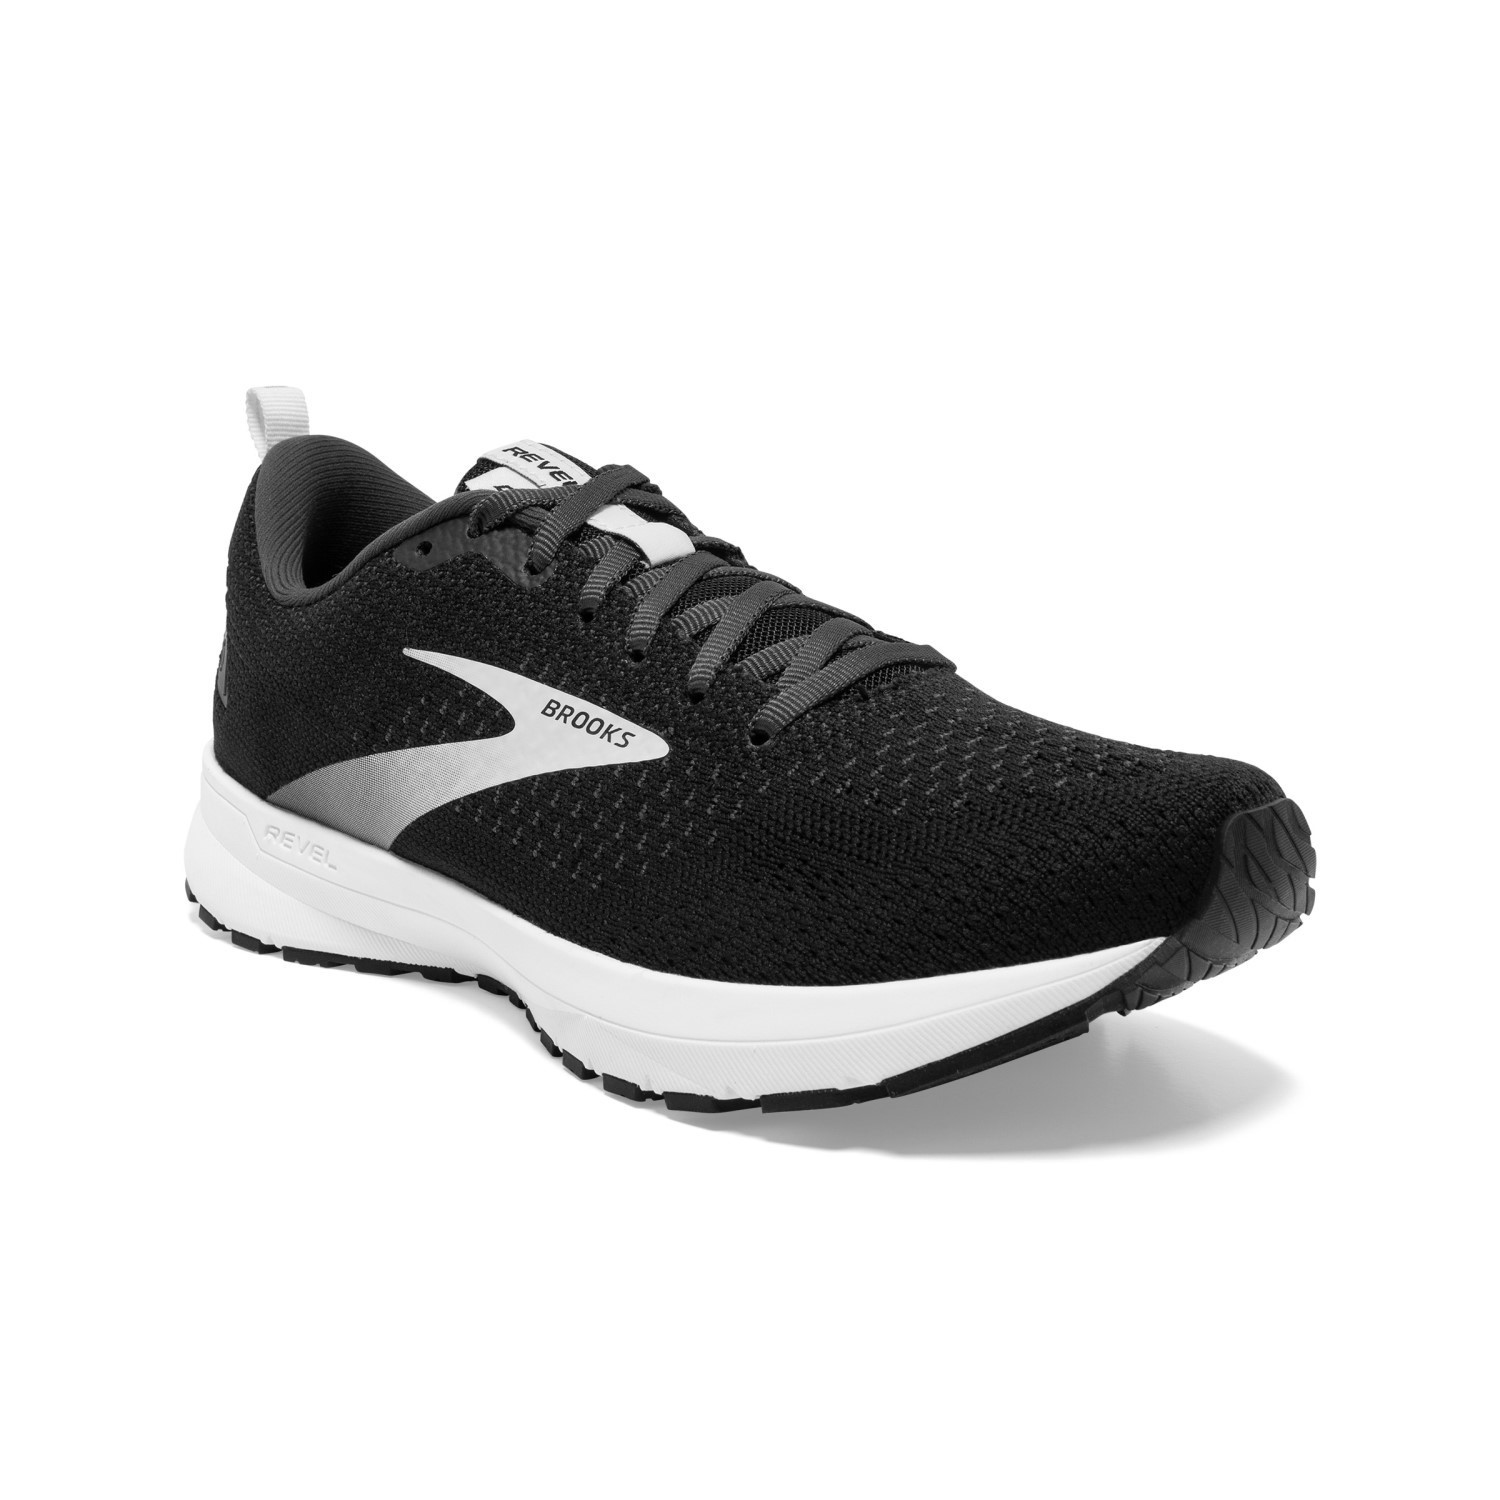 Brooks Revel 4 - Mens Running Shoes - Black/Oyster/Silver | Sportitude